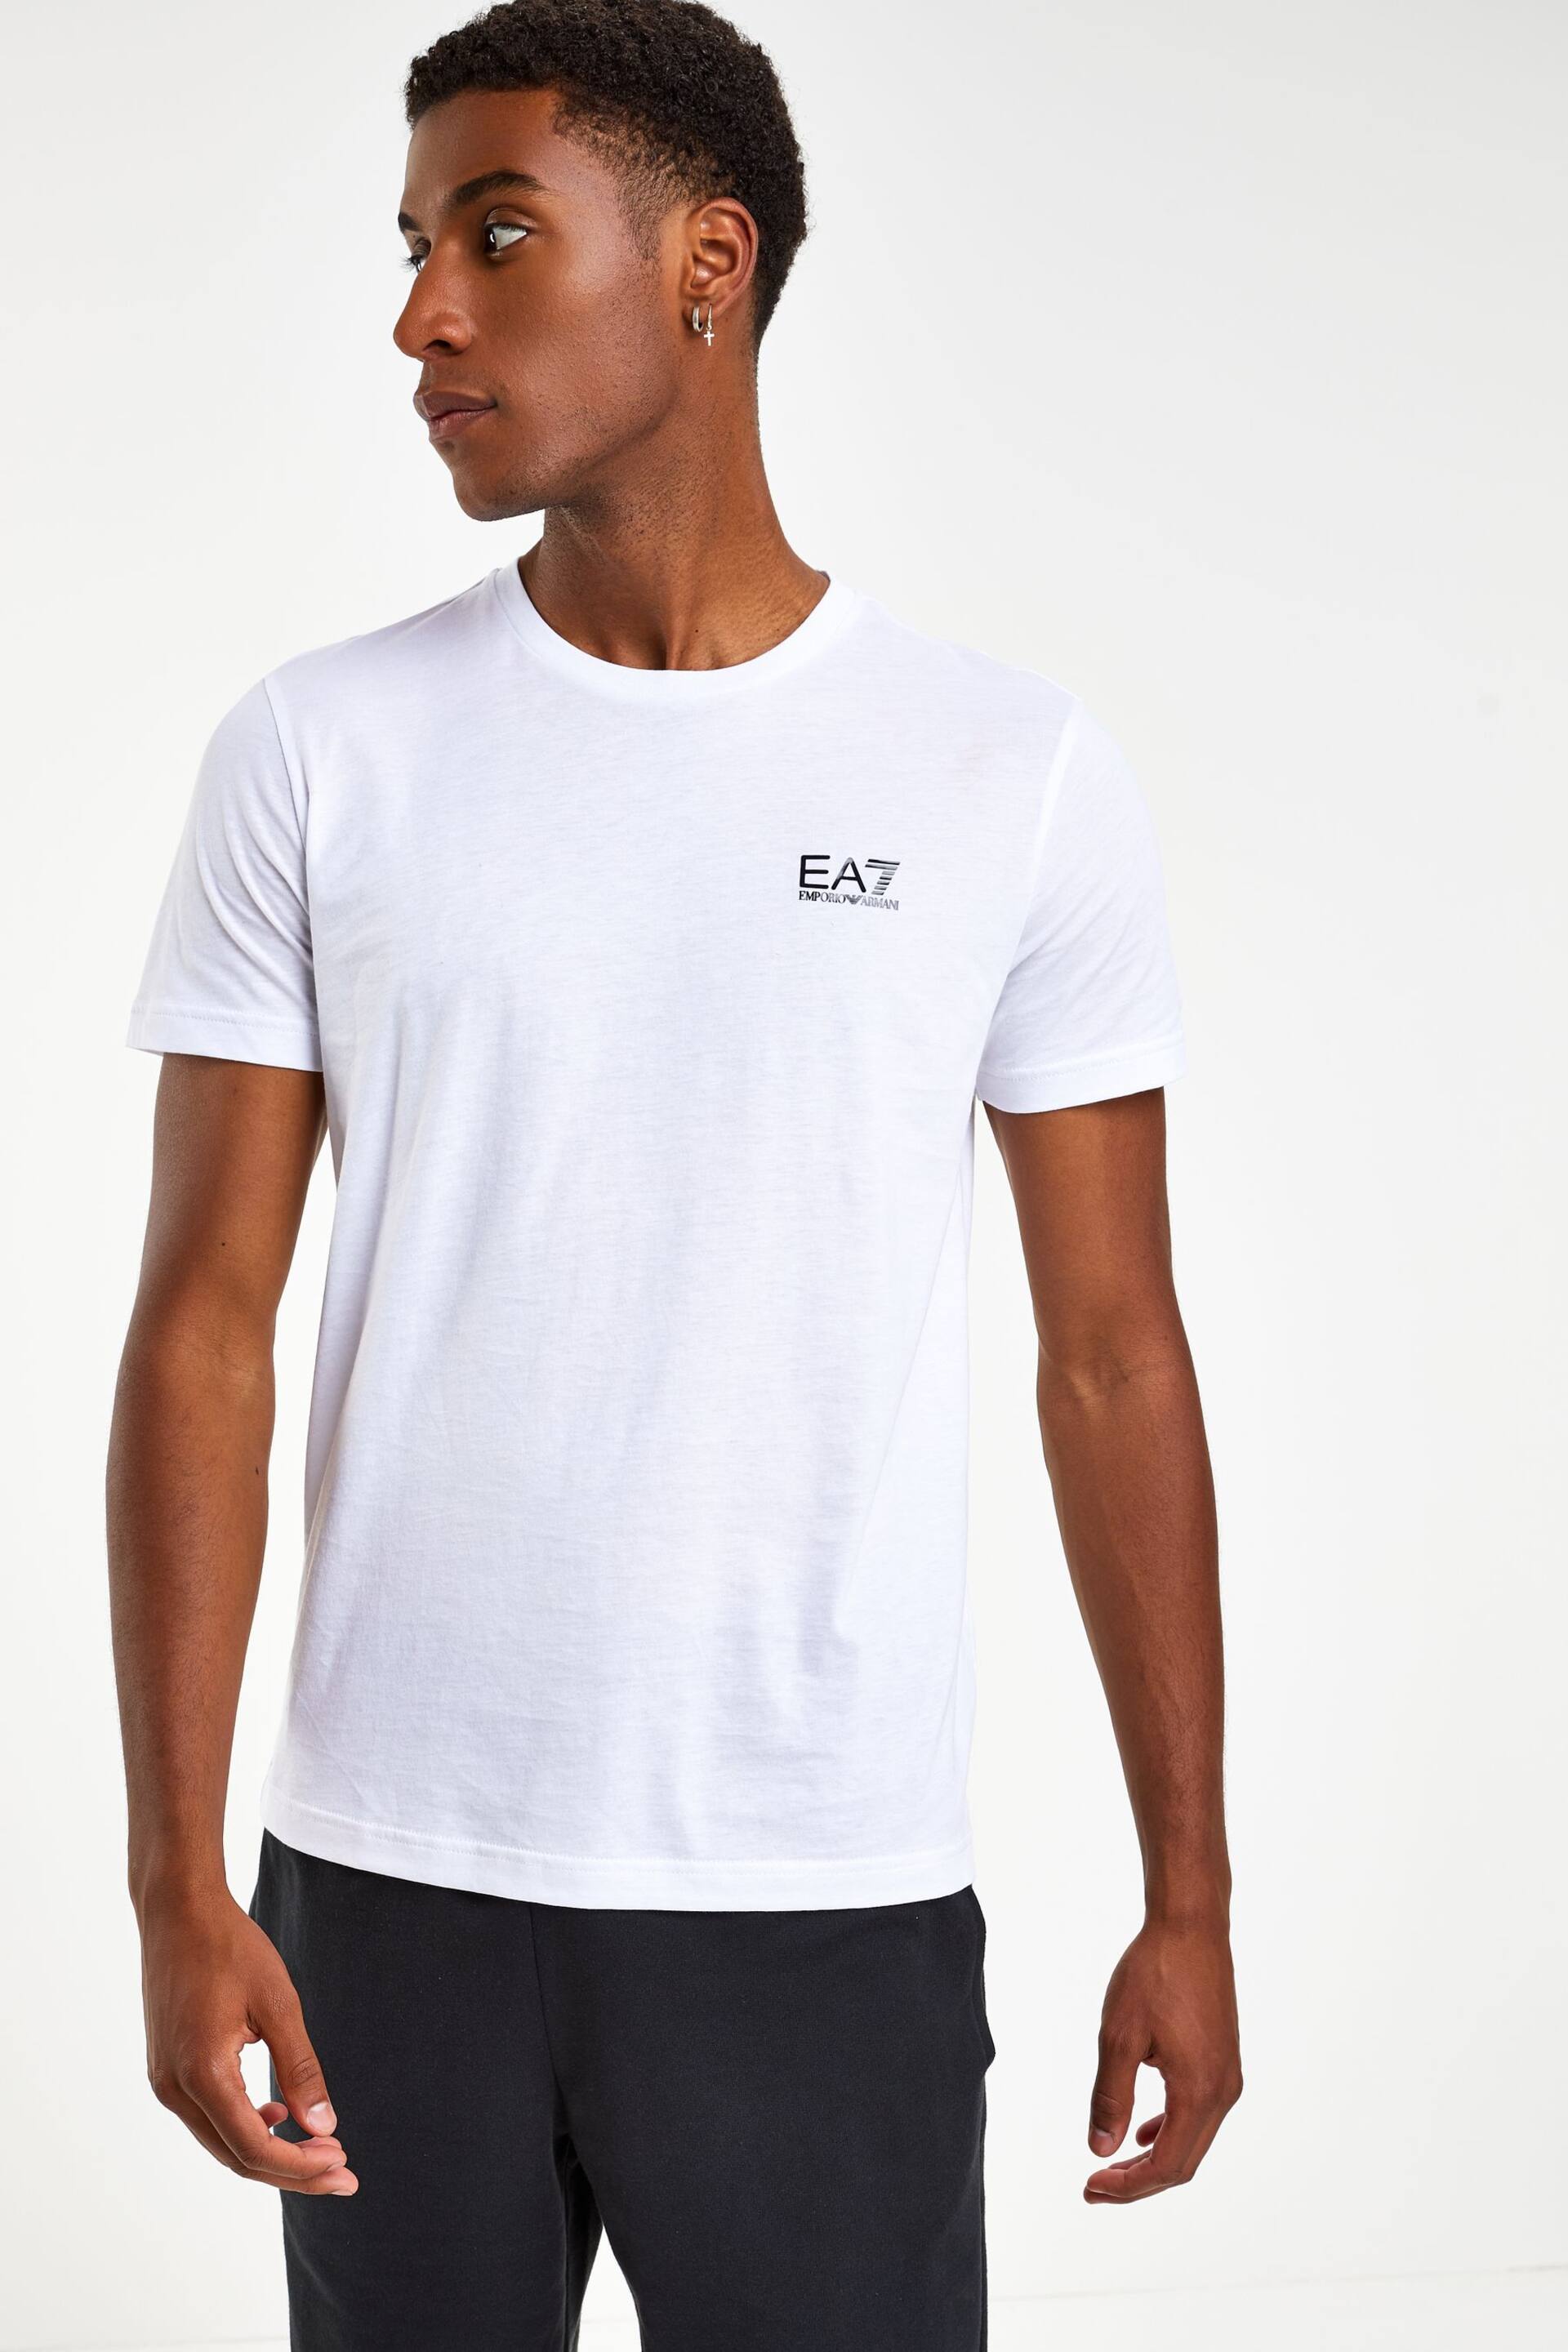 Emporio Armani EA7 Logo T-Shirt - Image 1 of 4